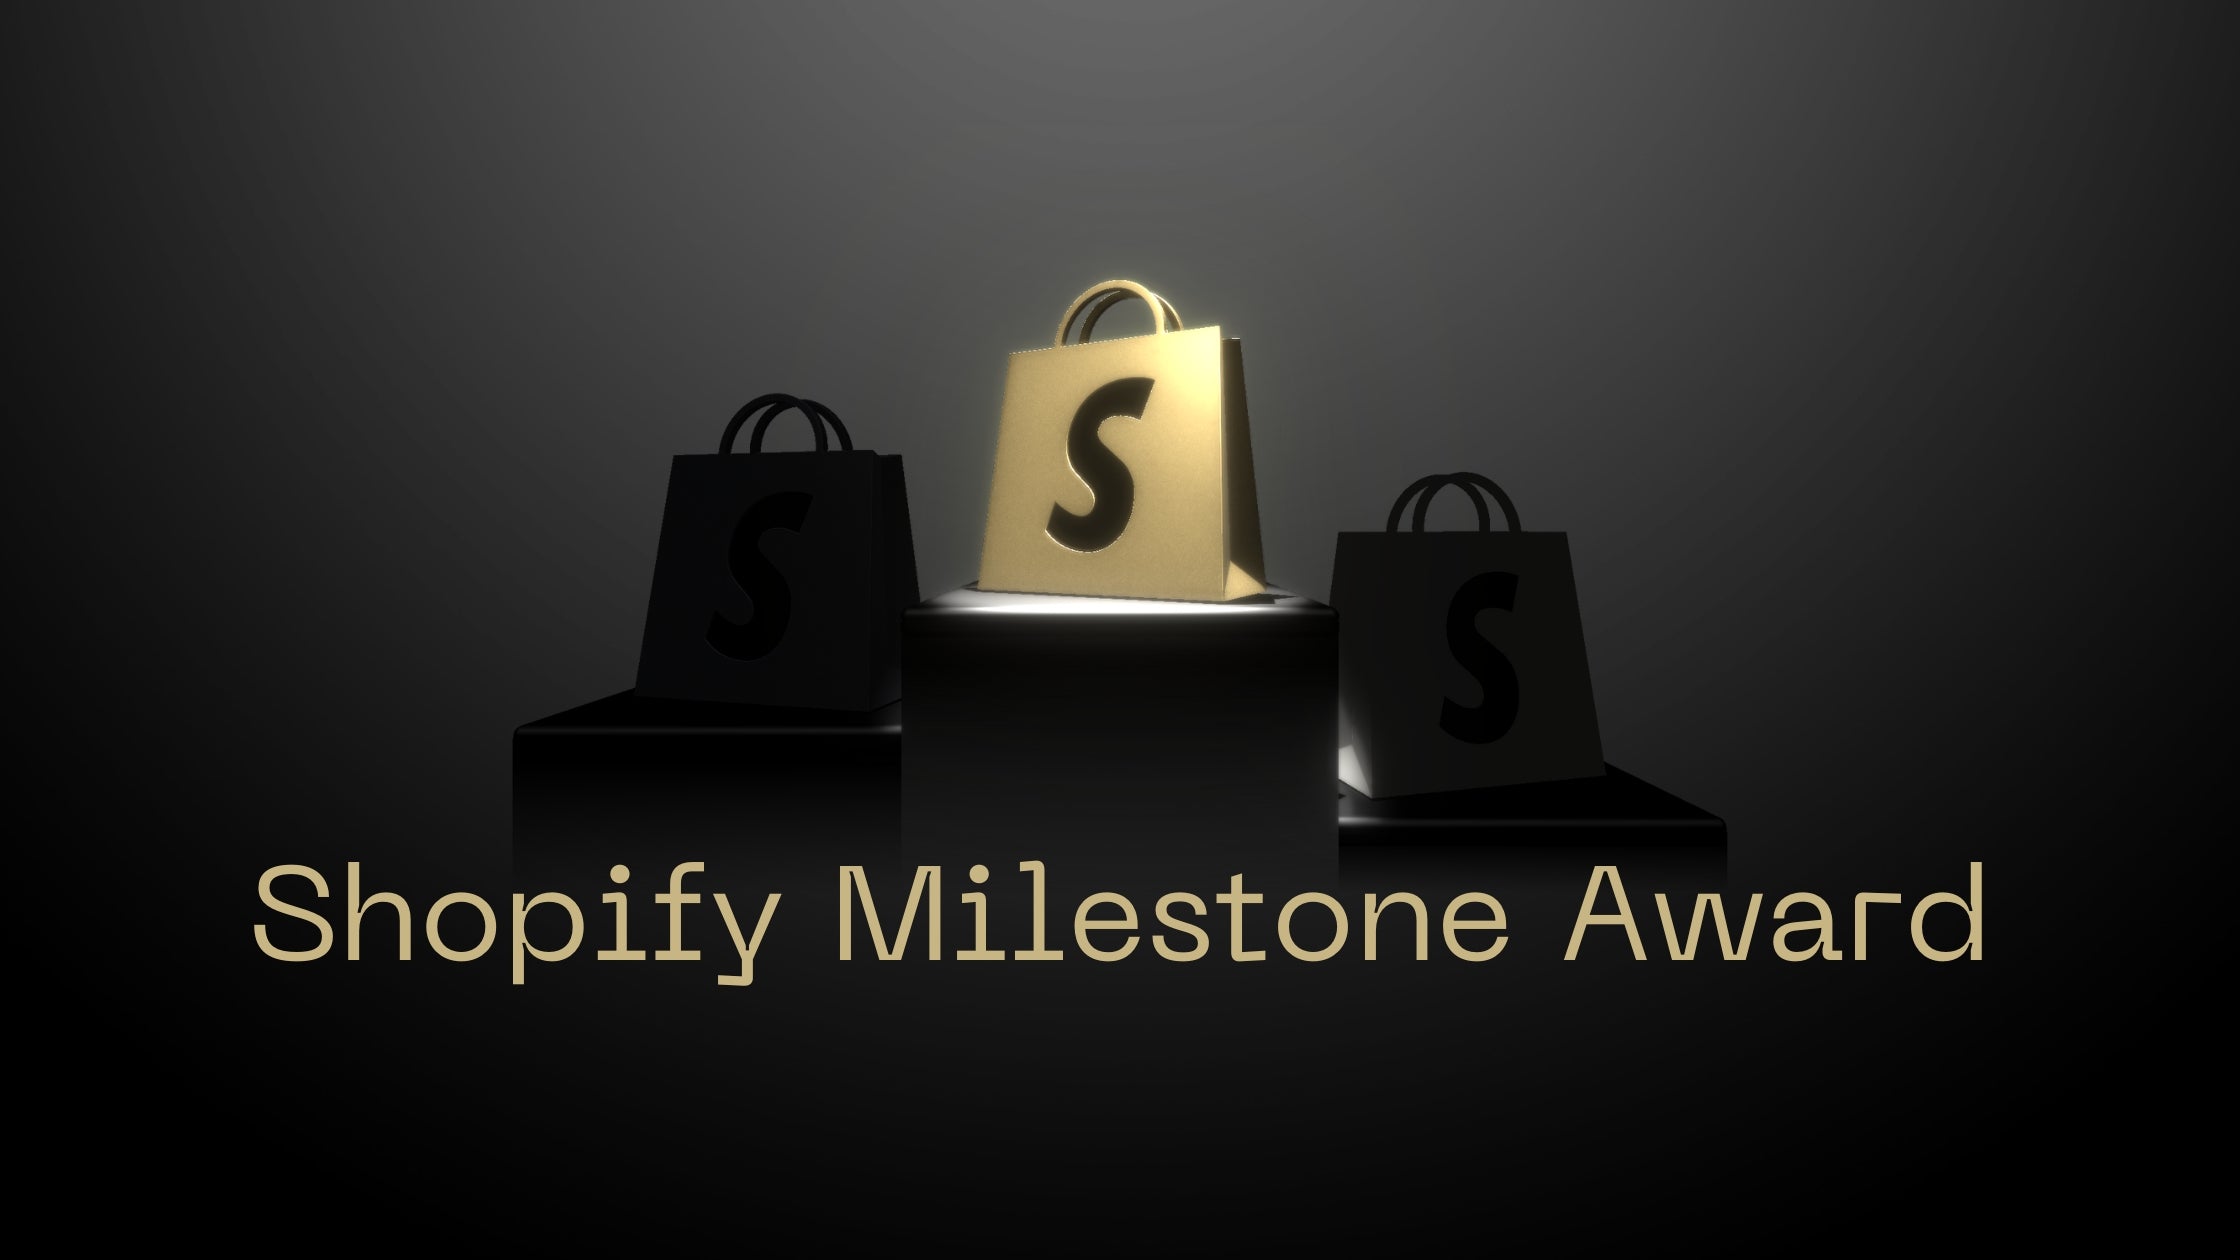 Rotai received shopify milestone award for 10K Orders